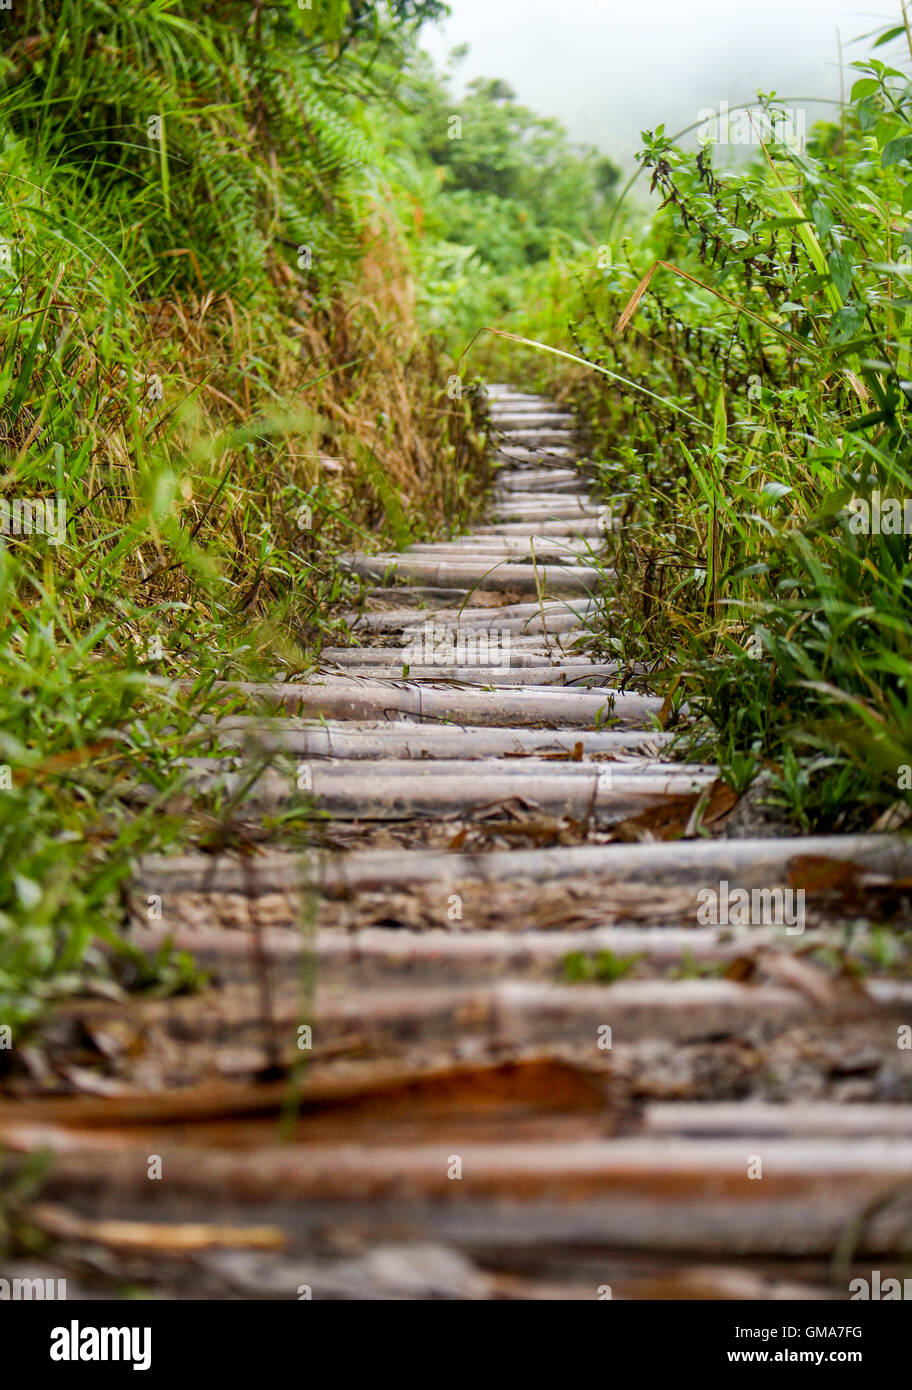 The winding path ahead. Stock Photo